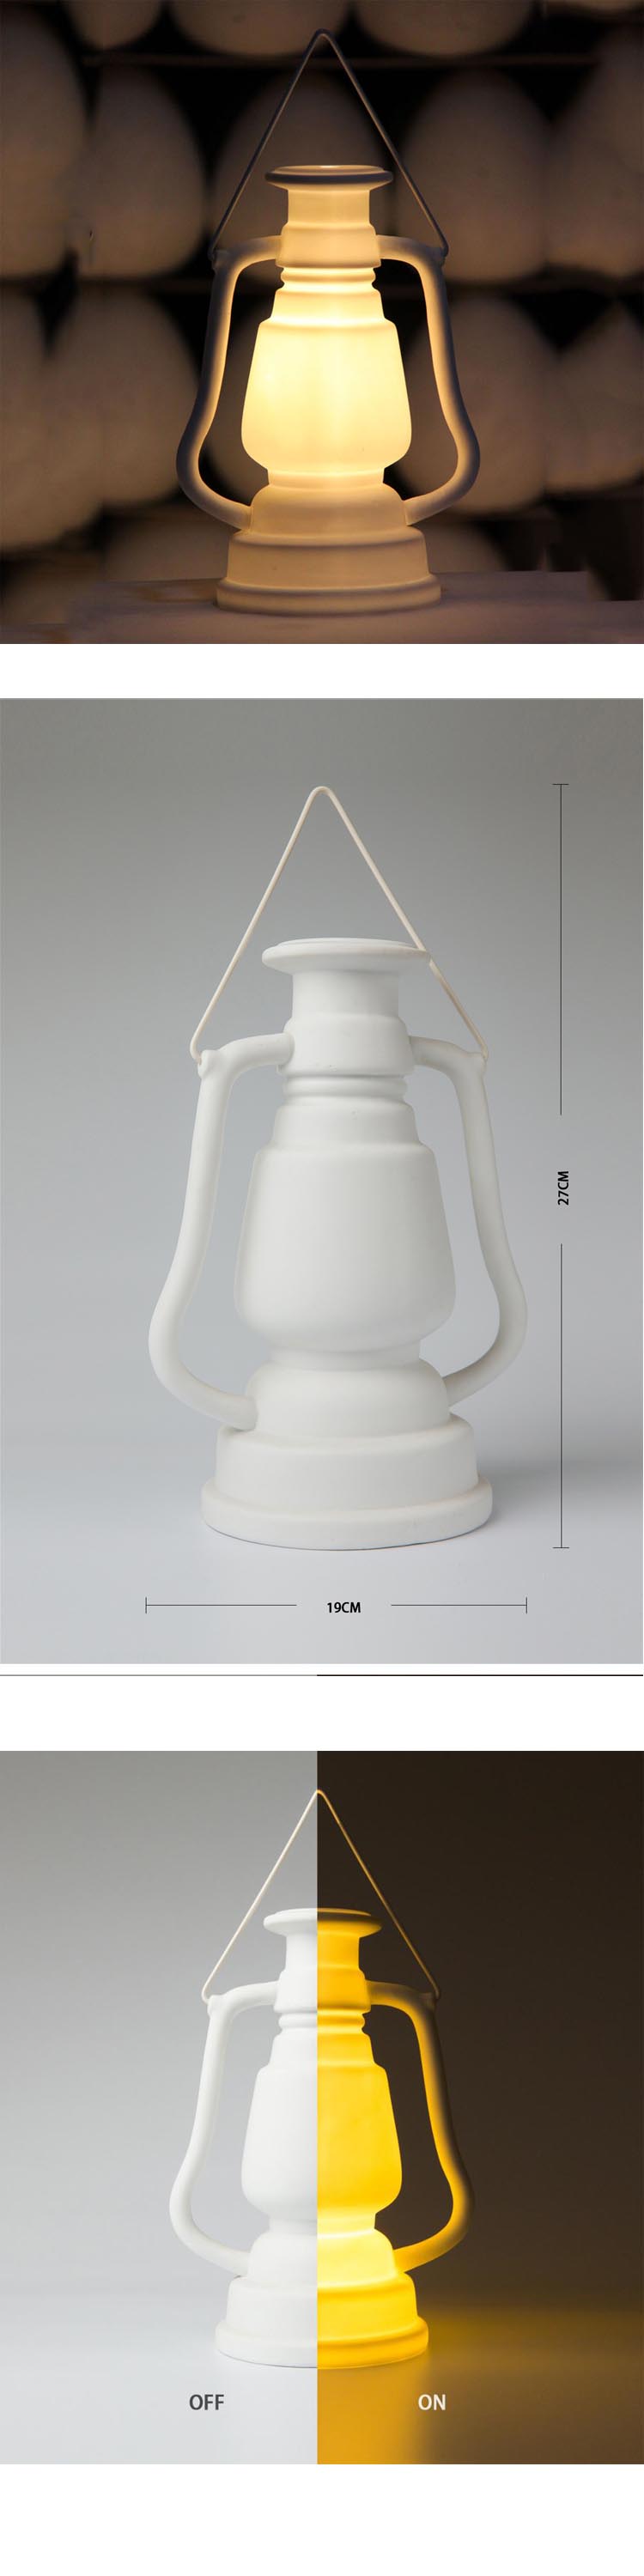 Home decoration vintage style lantern shape white glaze ceramic table lamp